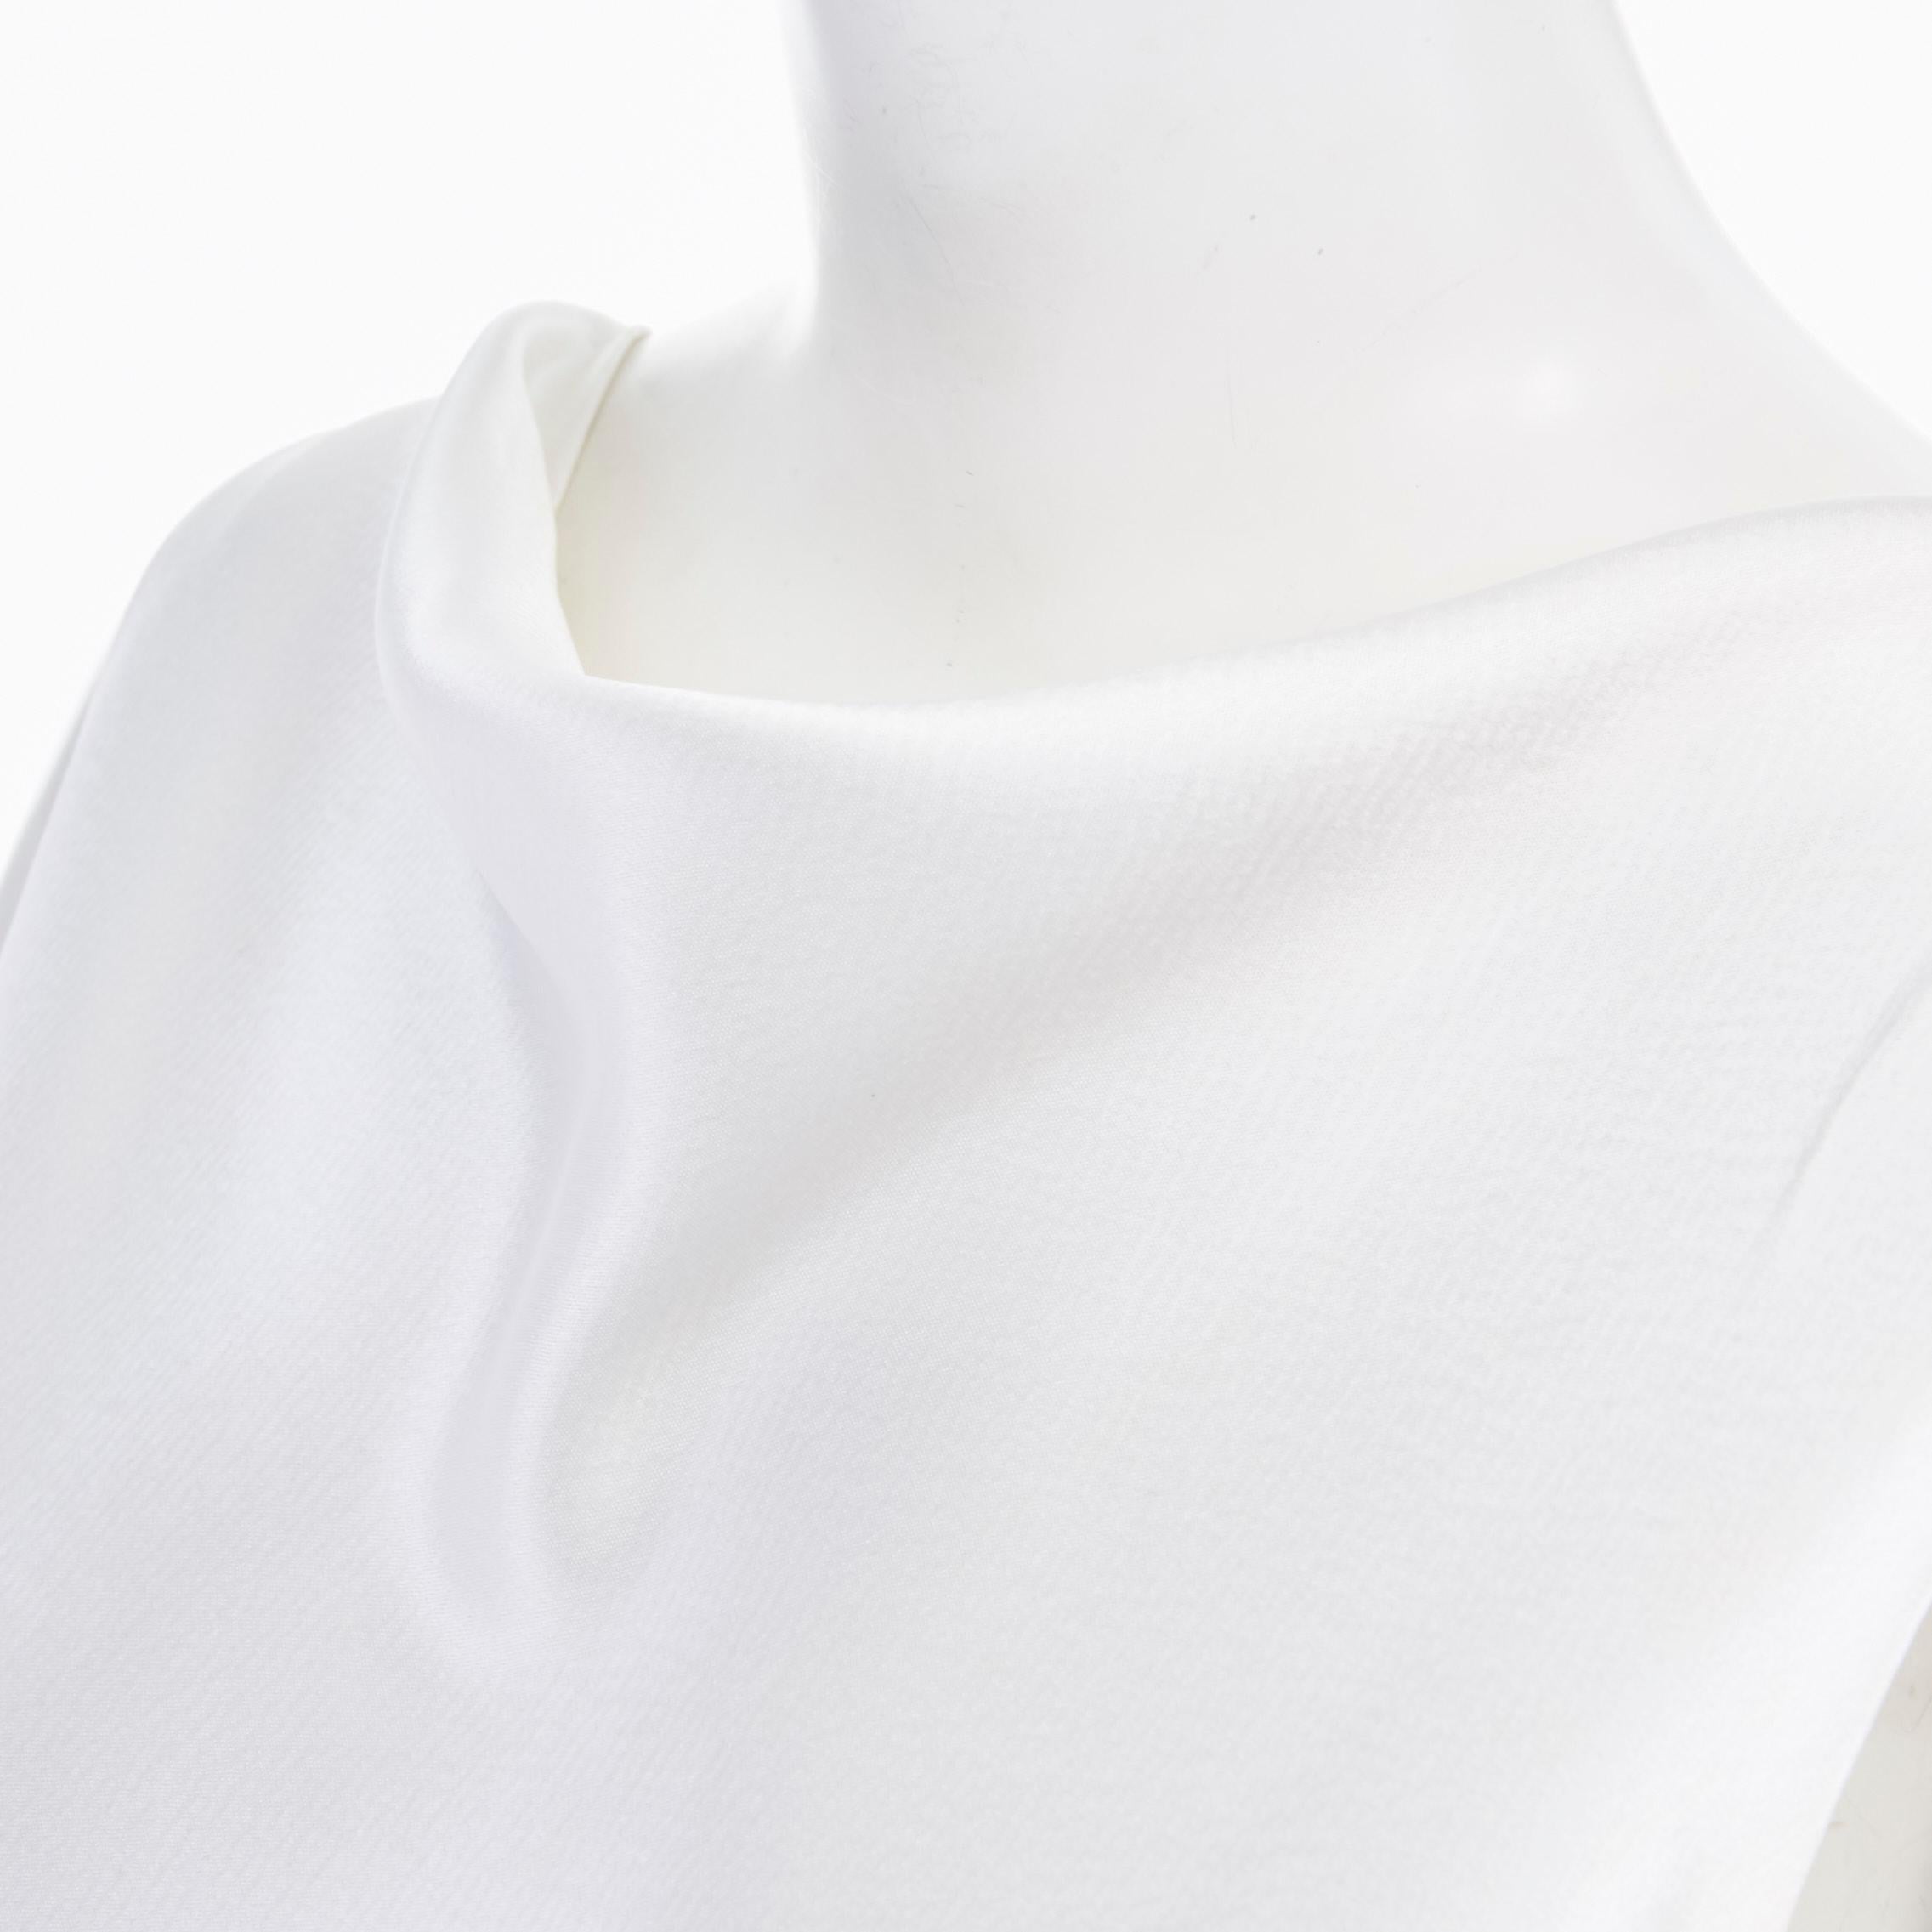 Women's BADGLEY MISCHKA white draped neckline viscose top V-back maxi gown dress US6 S